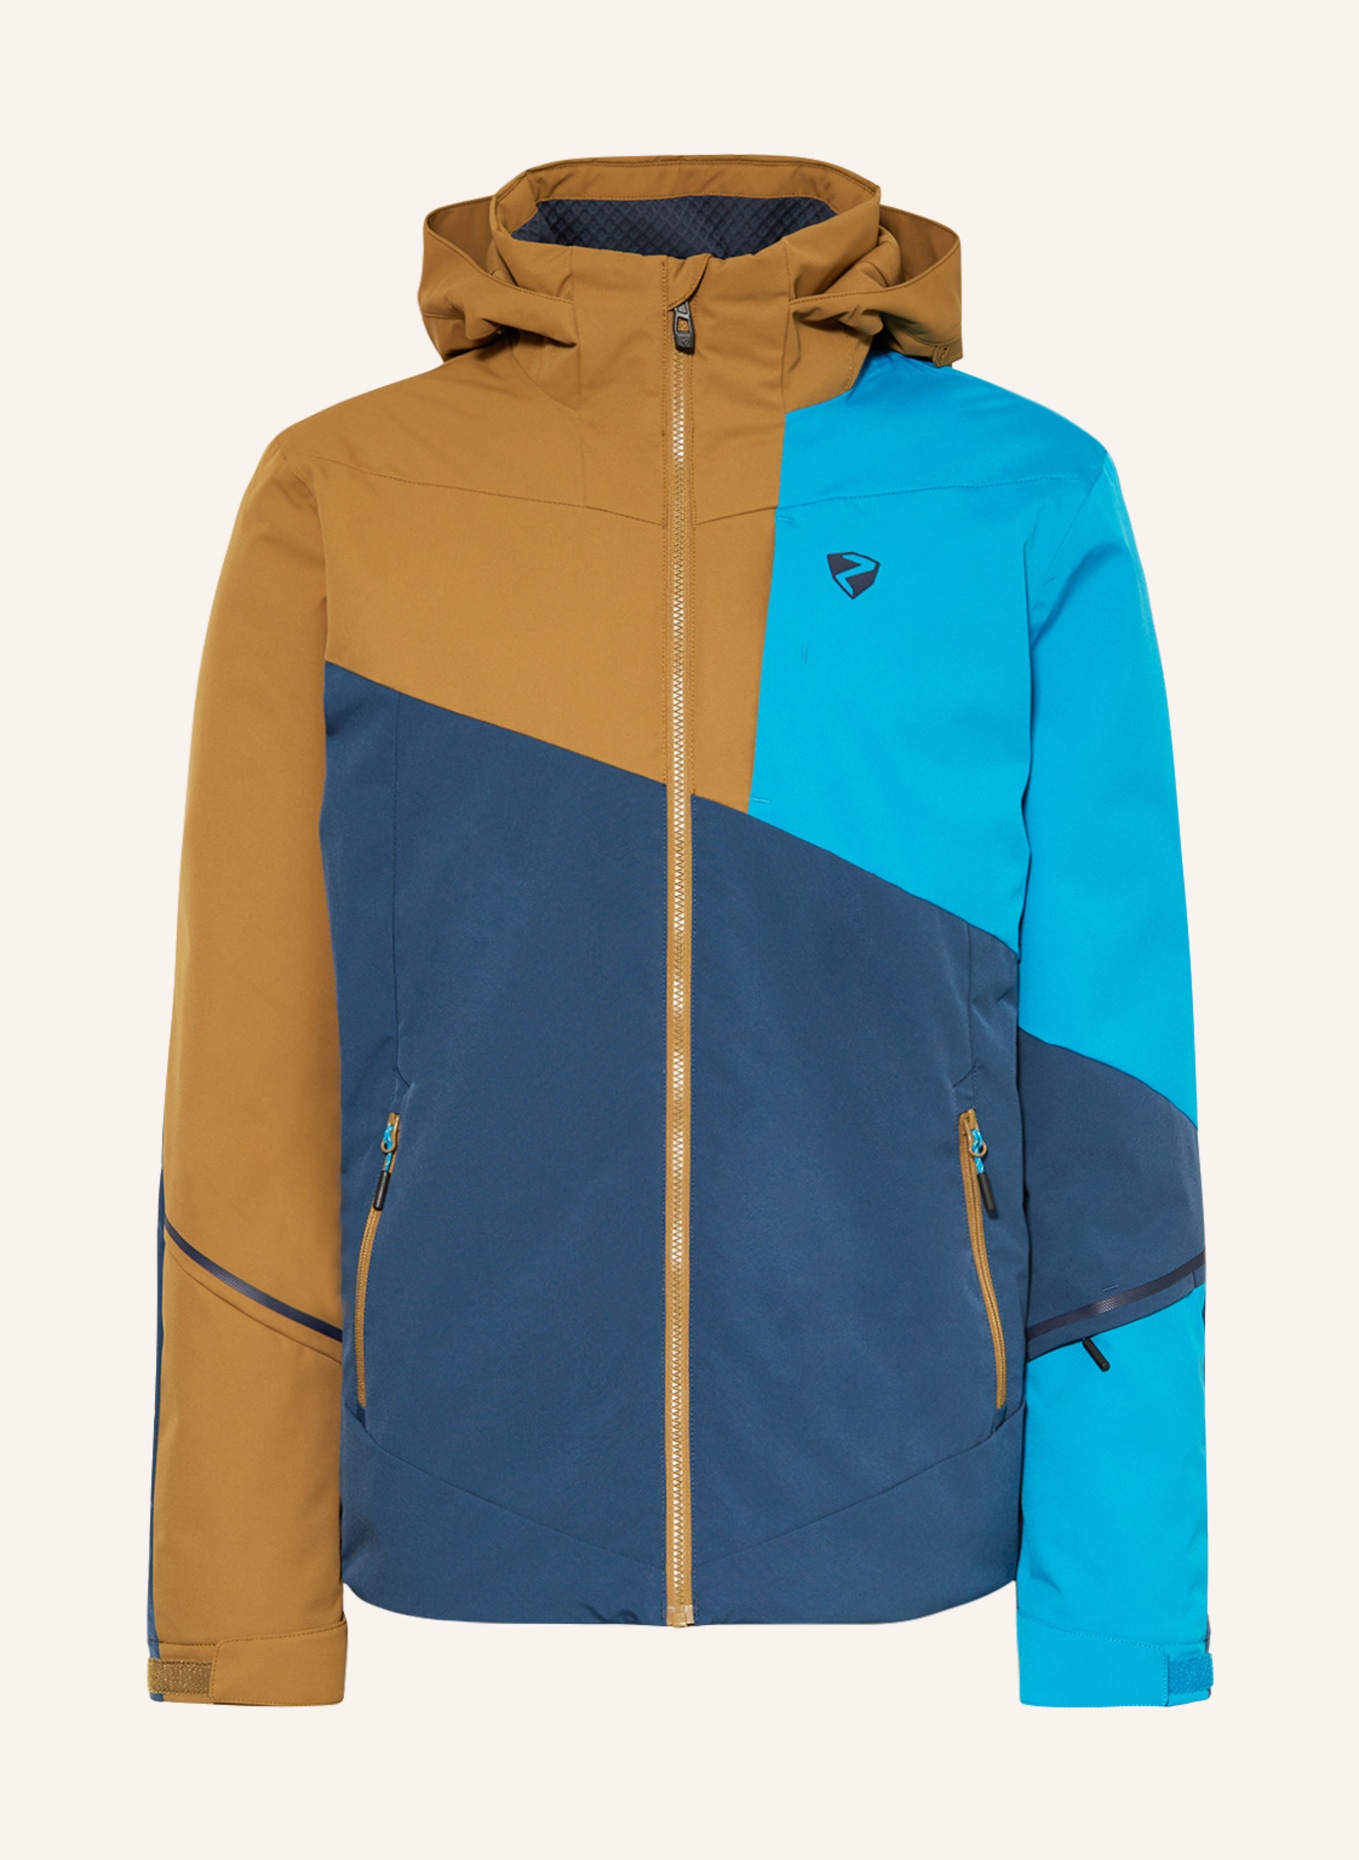 ziener Ski jacket TIMPA dark olive/ turquoise/ blue in